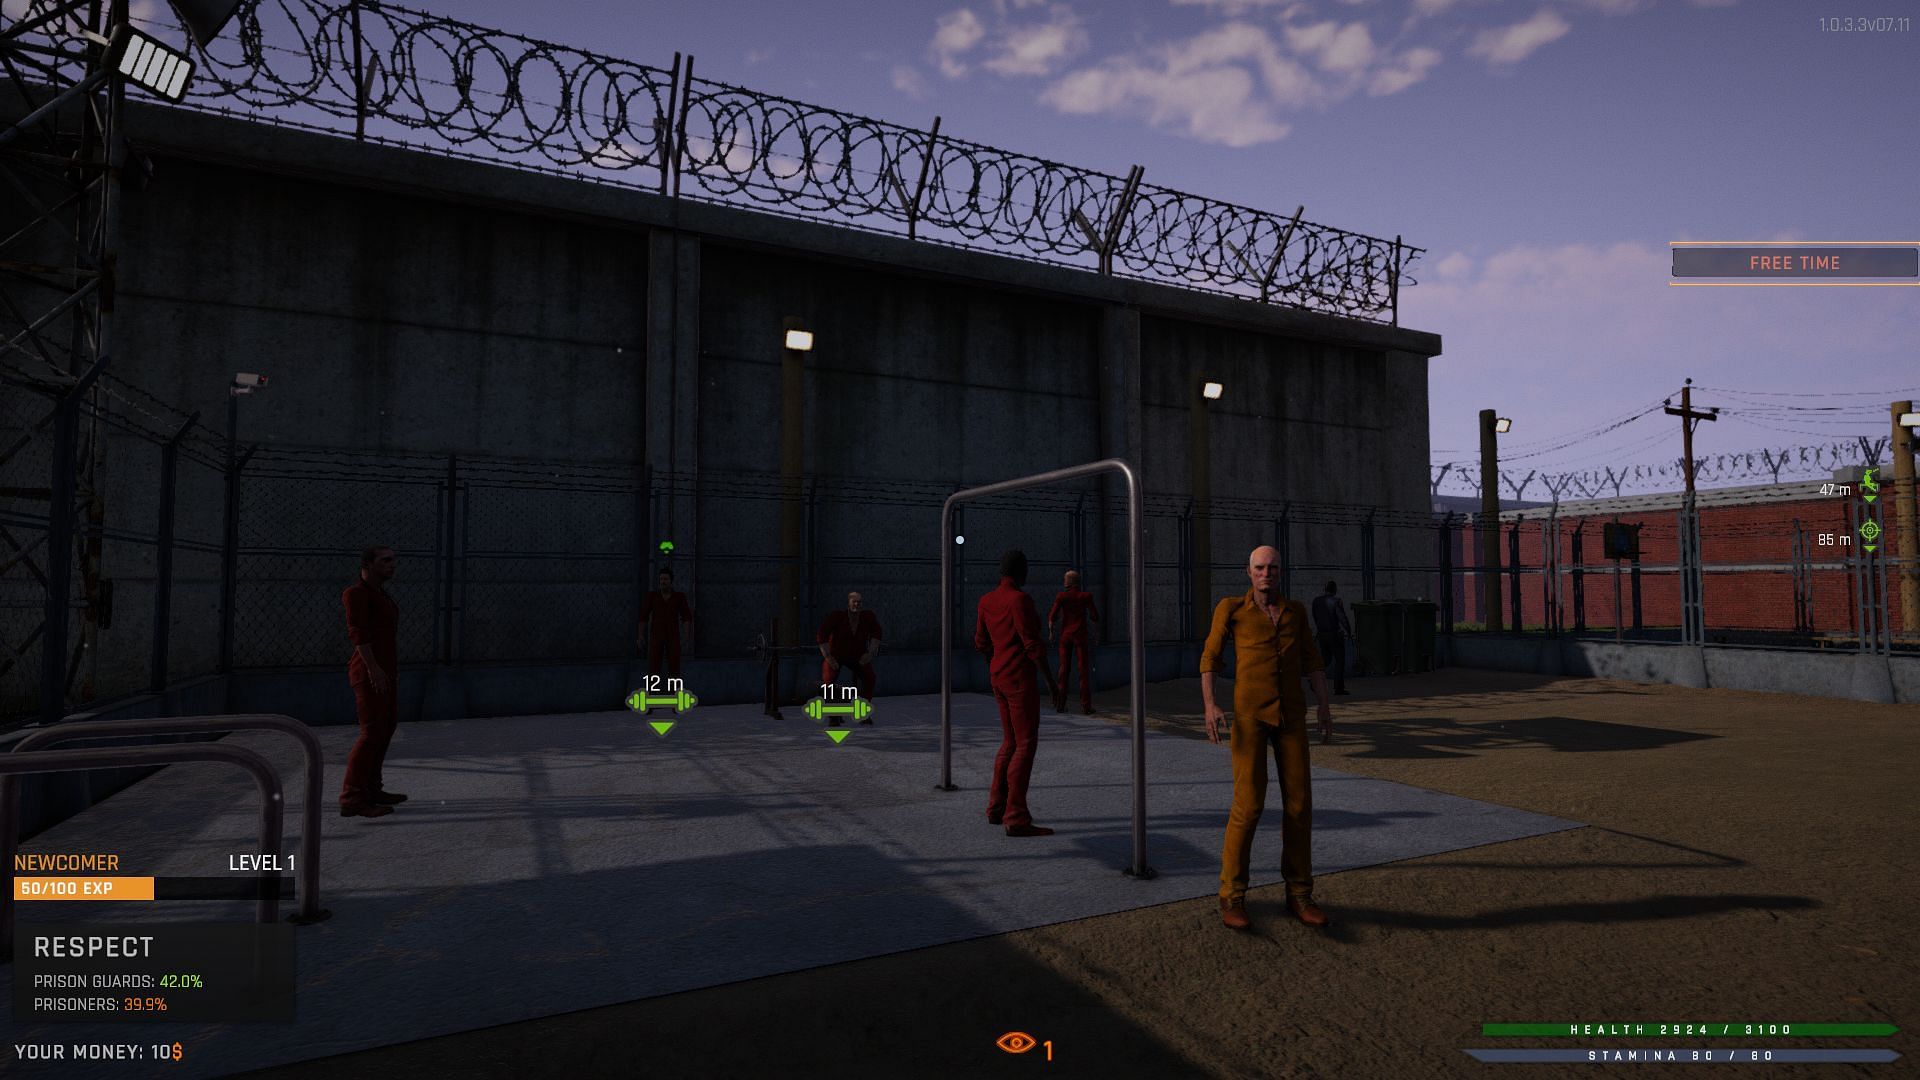 Free Time (Image via Prison Simulator)